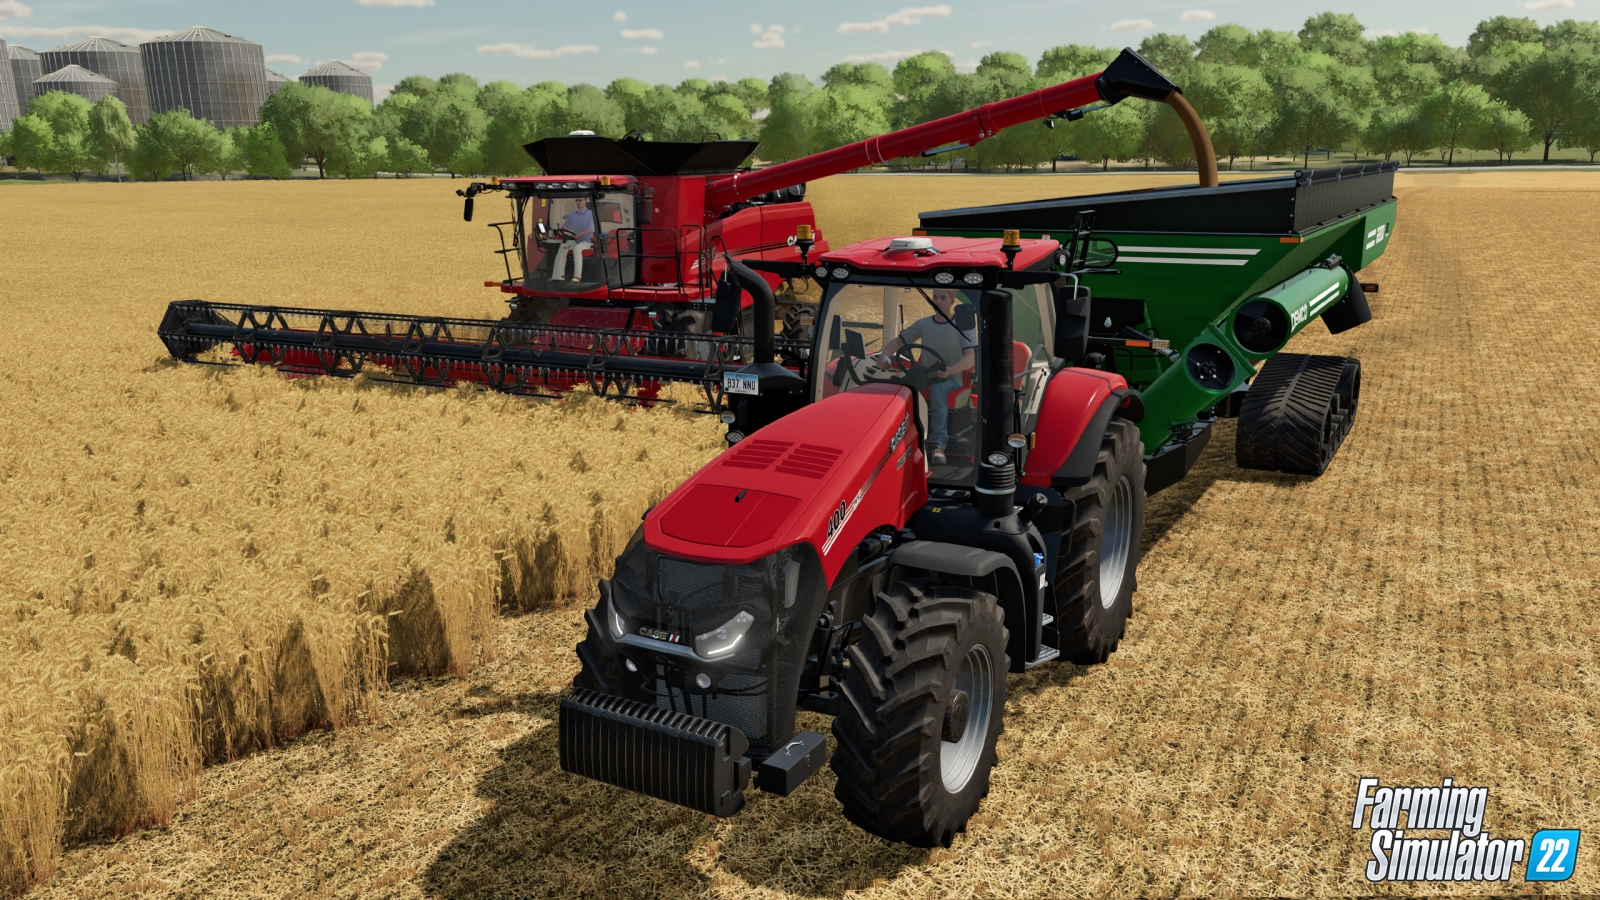 Farming Simulator 22 Mods on Consoles